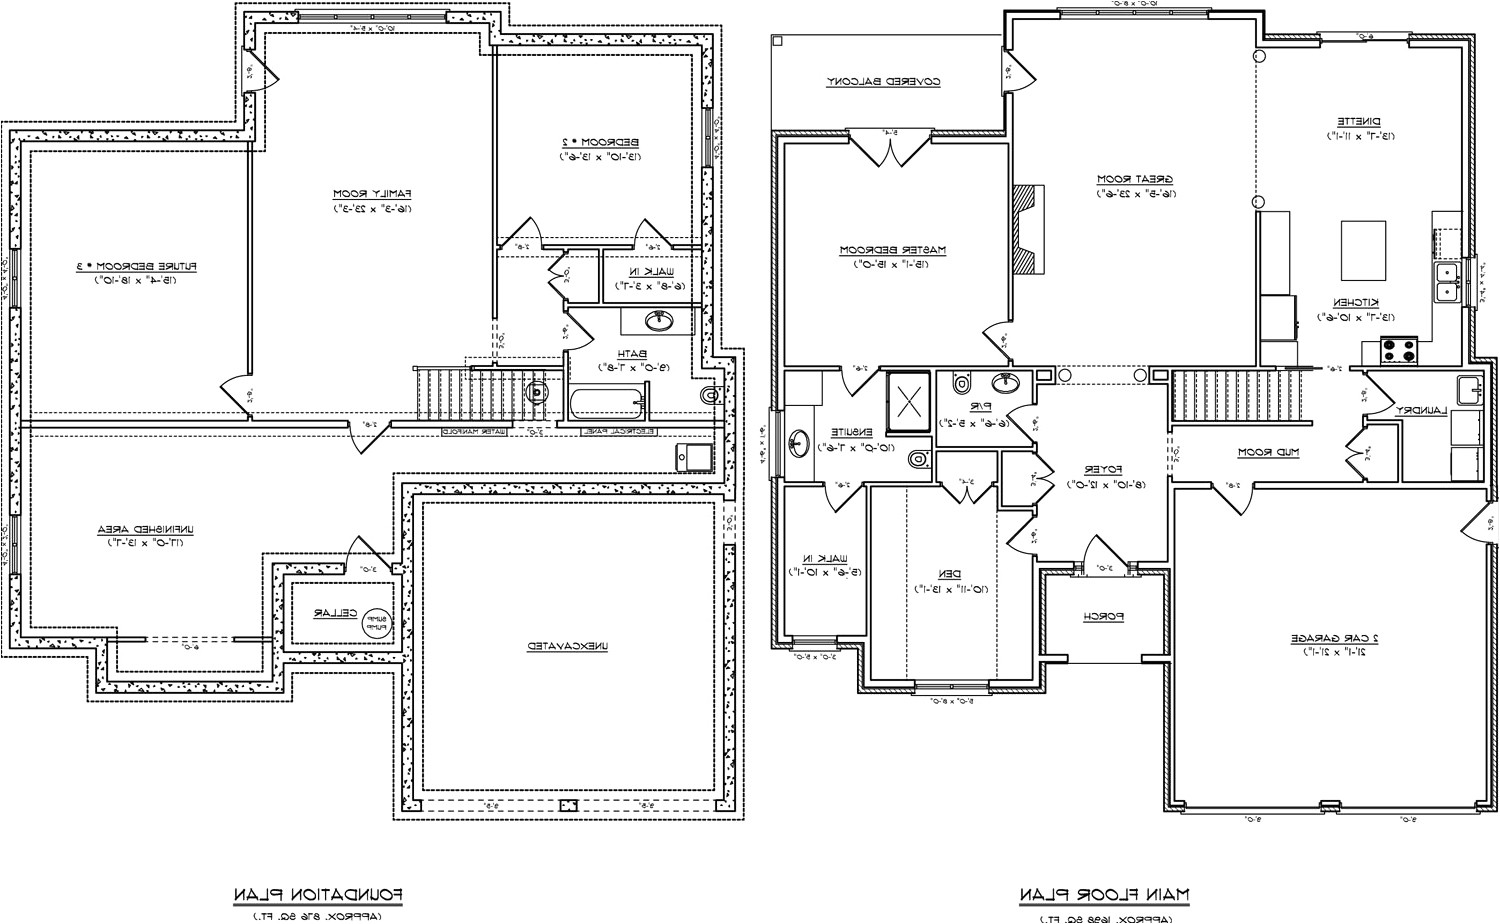 2 story house plans open concept